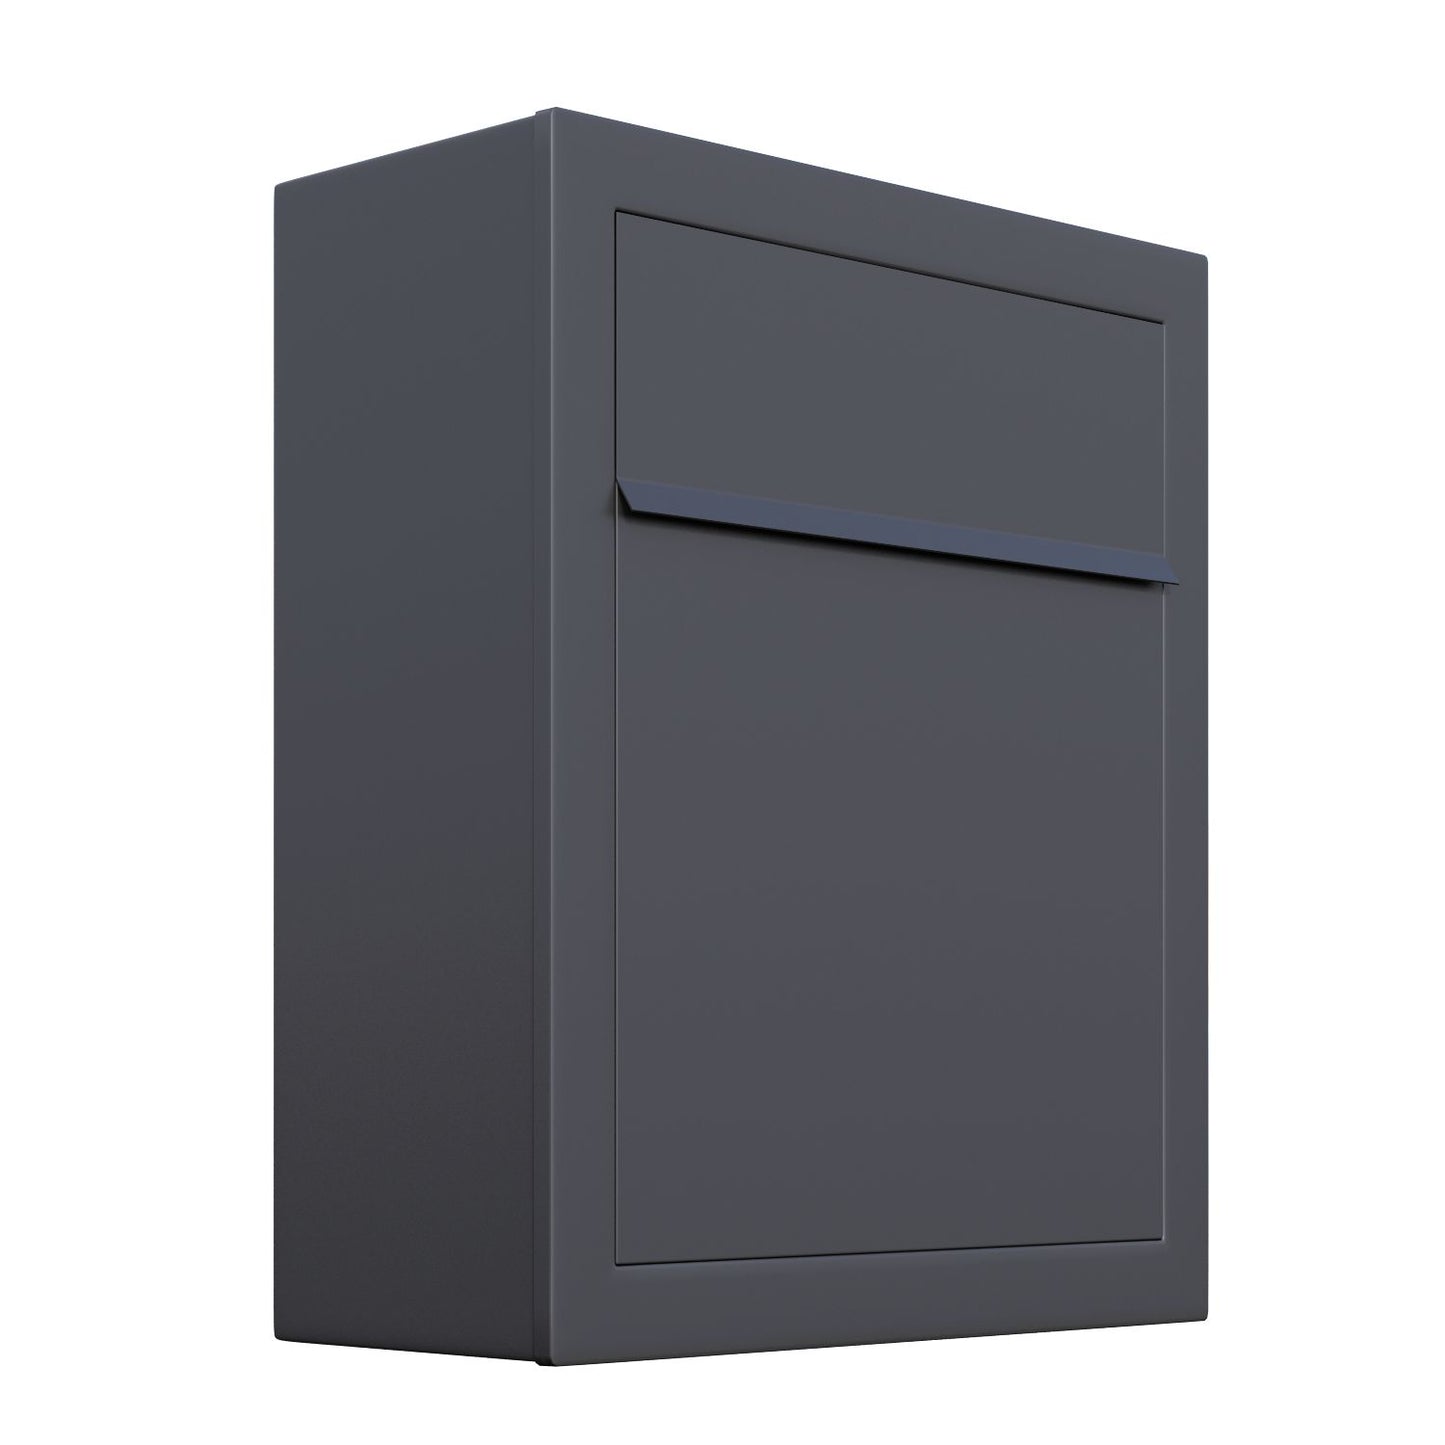 BASE by Bravios - Modern wall-mounted anthracite mailbox